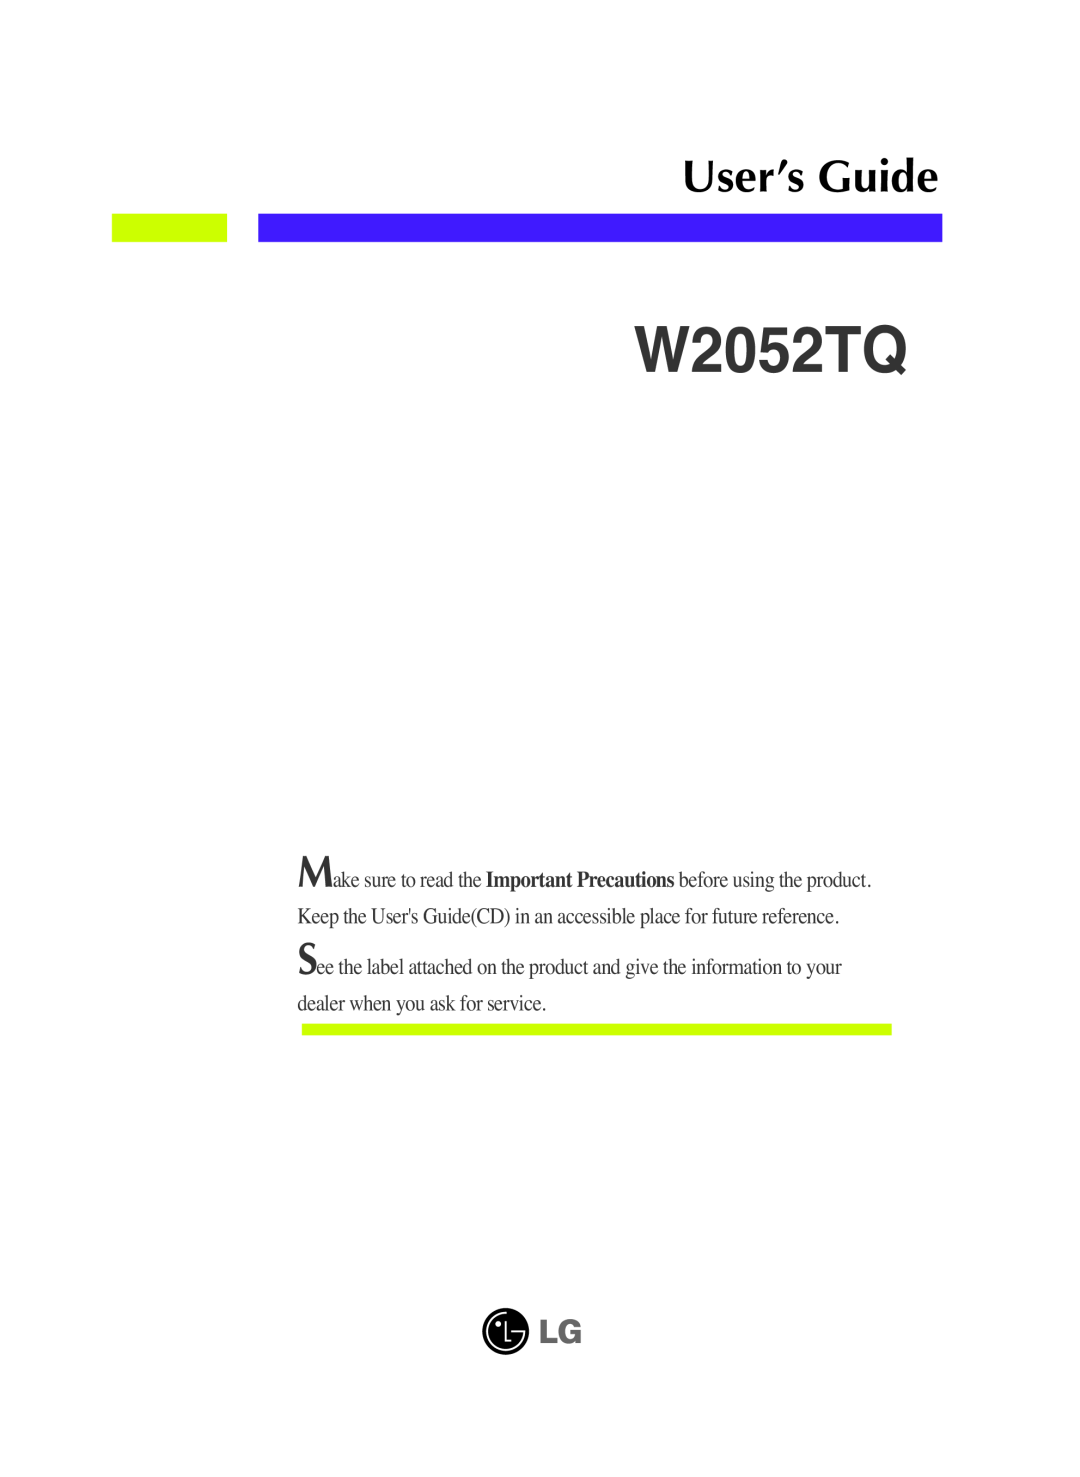 LG Electronics W2052TQ manual User’s Guide 